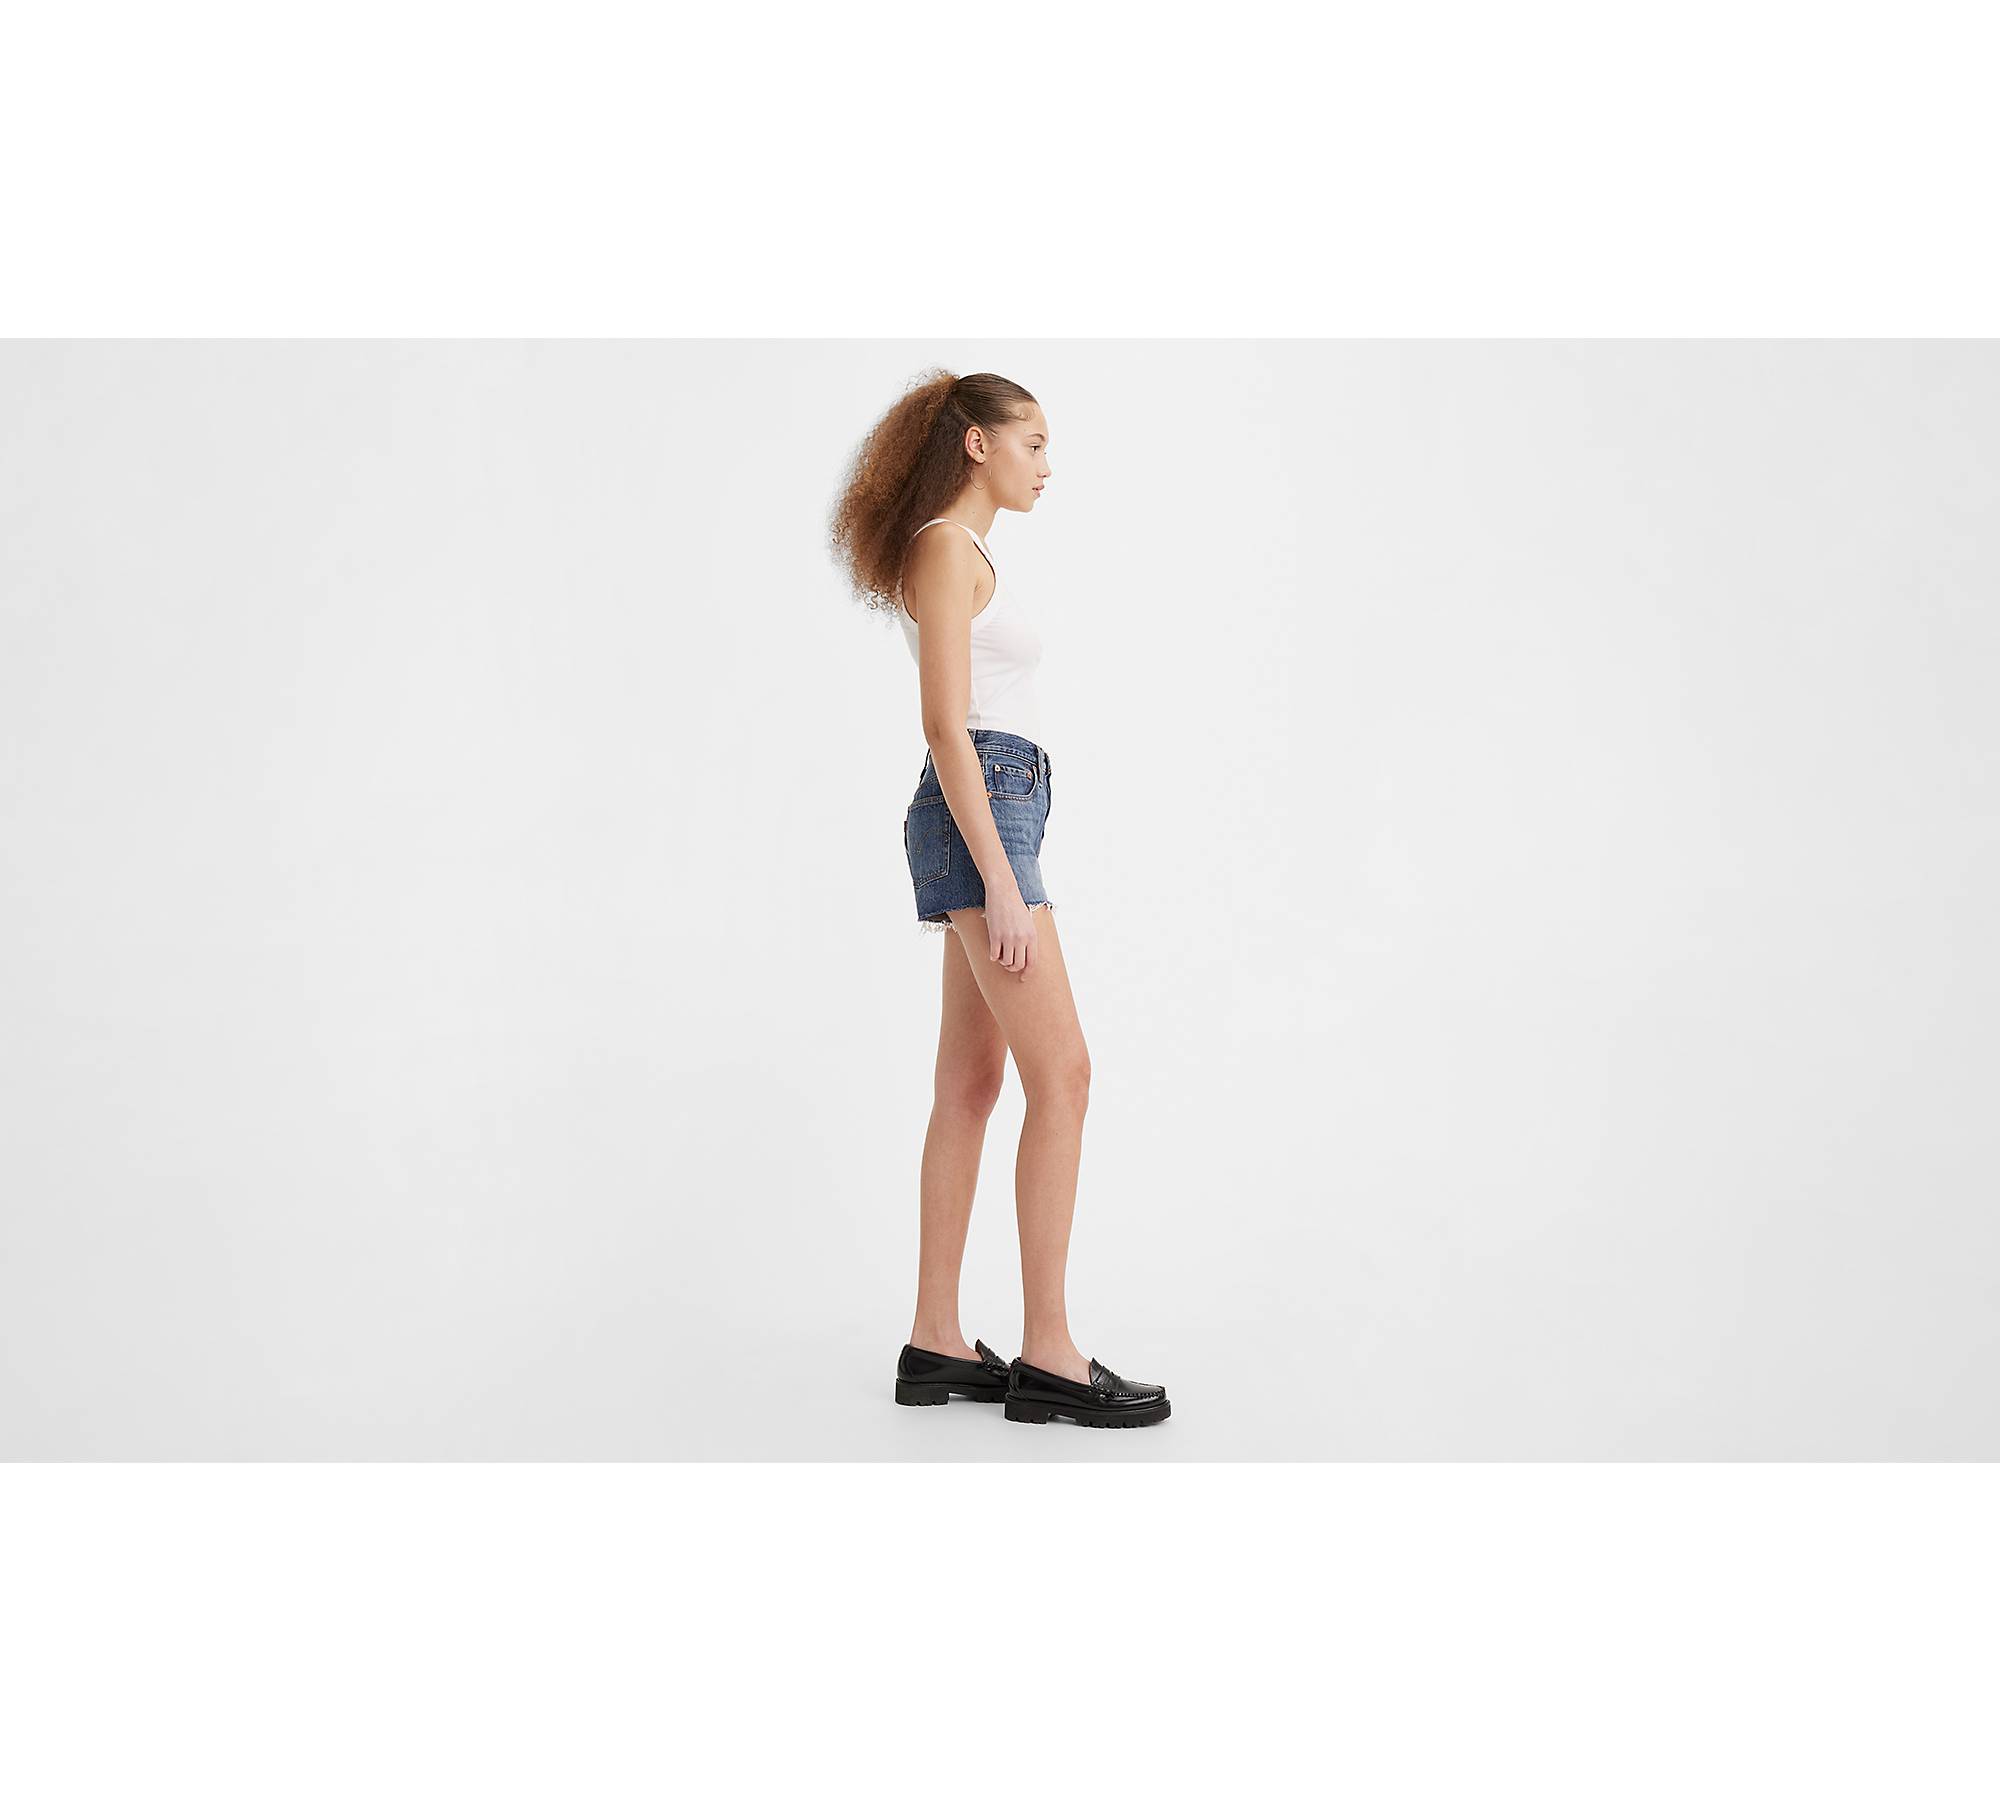 501® Original Fit High Rise Women's Shorts - Medium Wash | Levi's® US